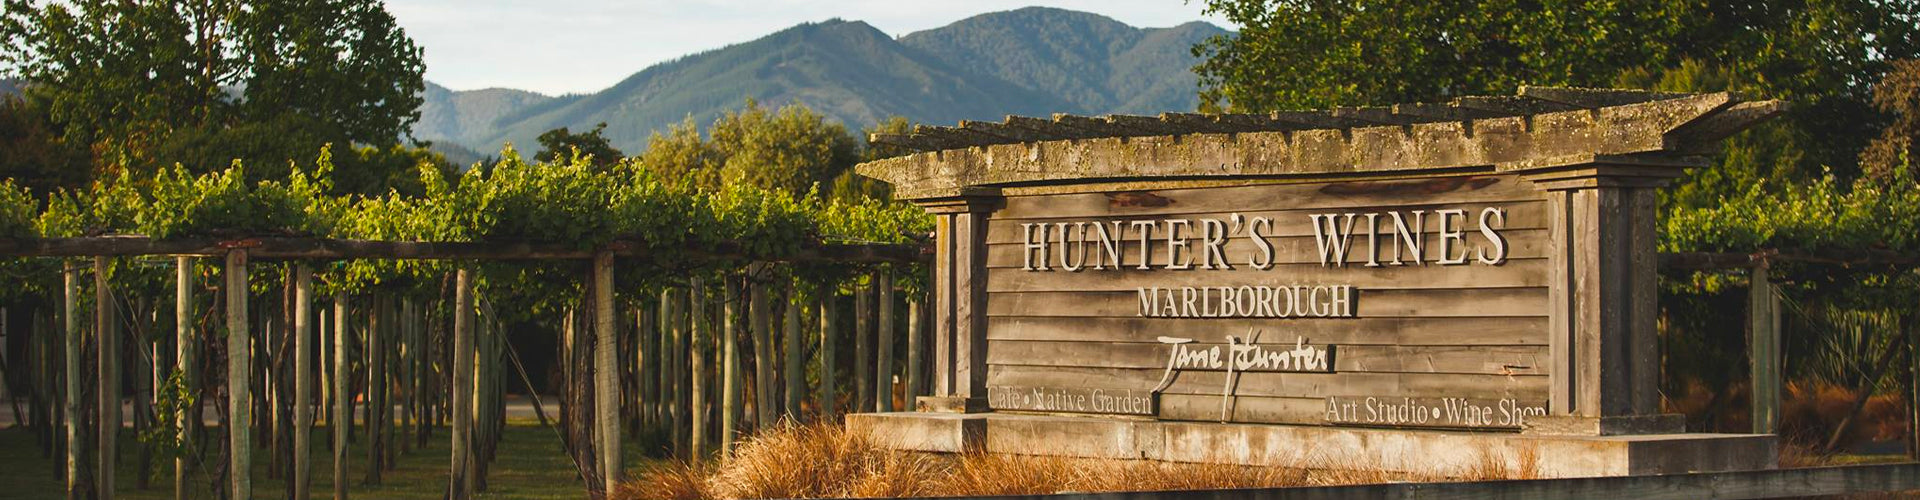 Hunter's Wines Entrance Sign Marlborough, New Zealand